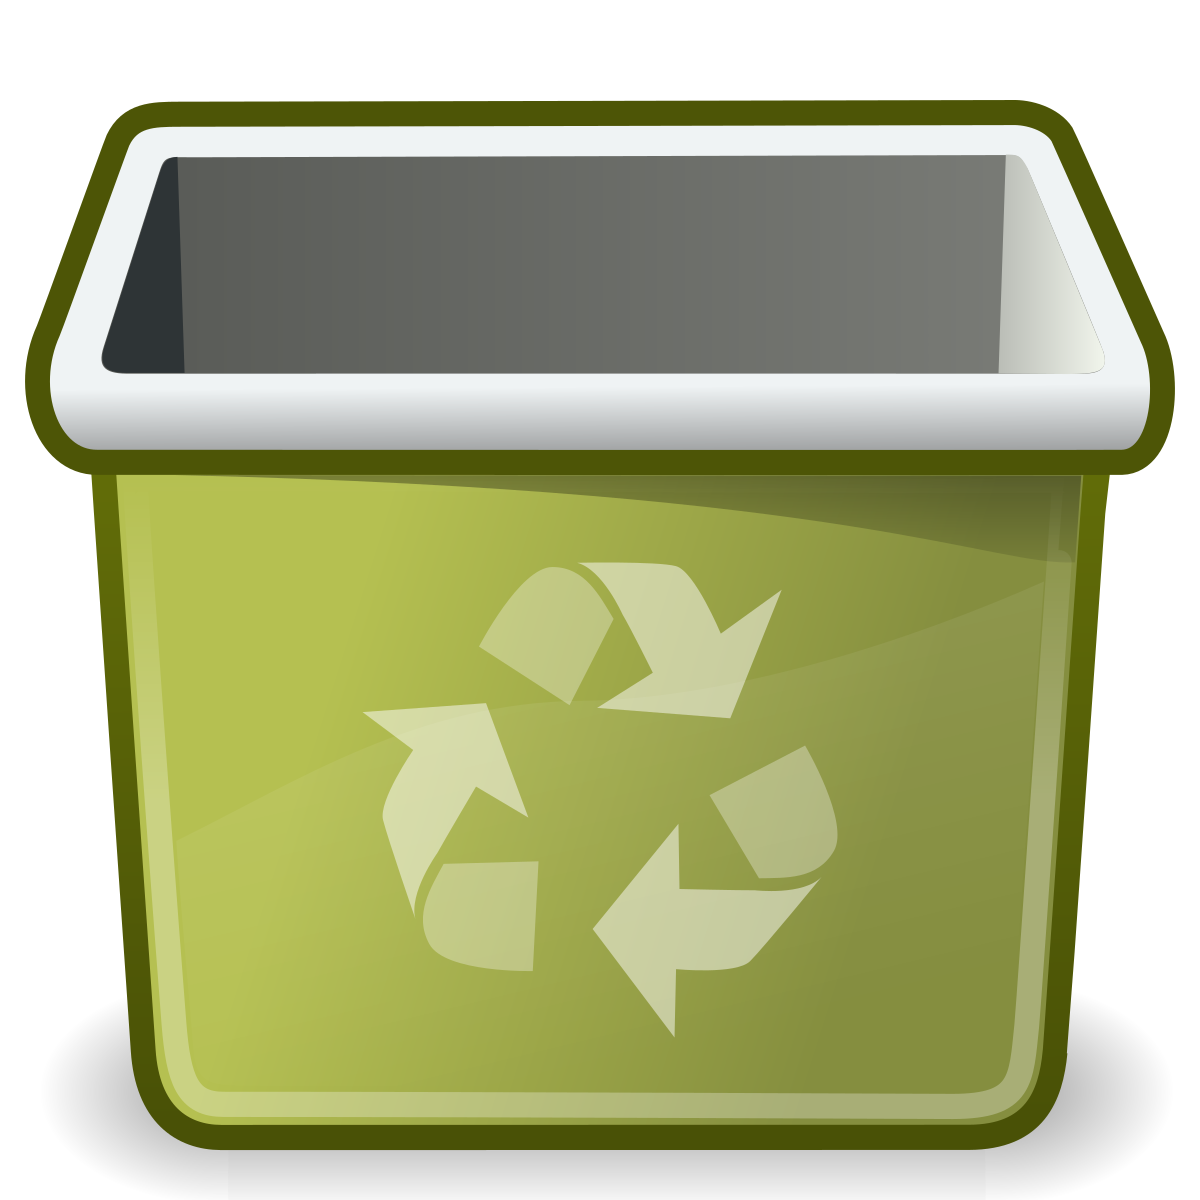 Trash bin or recycle bin